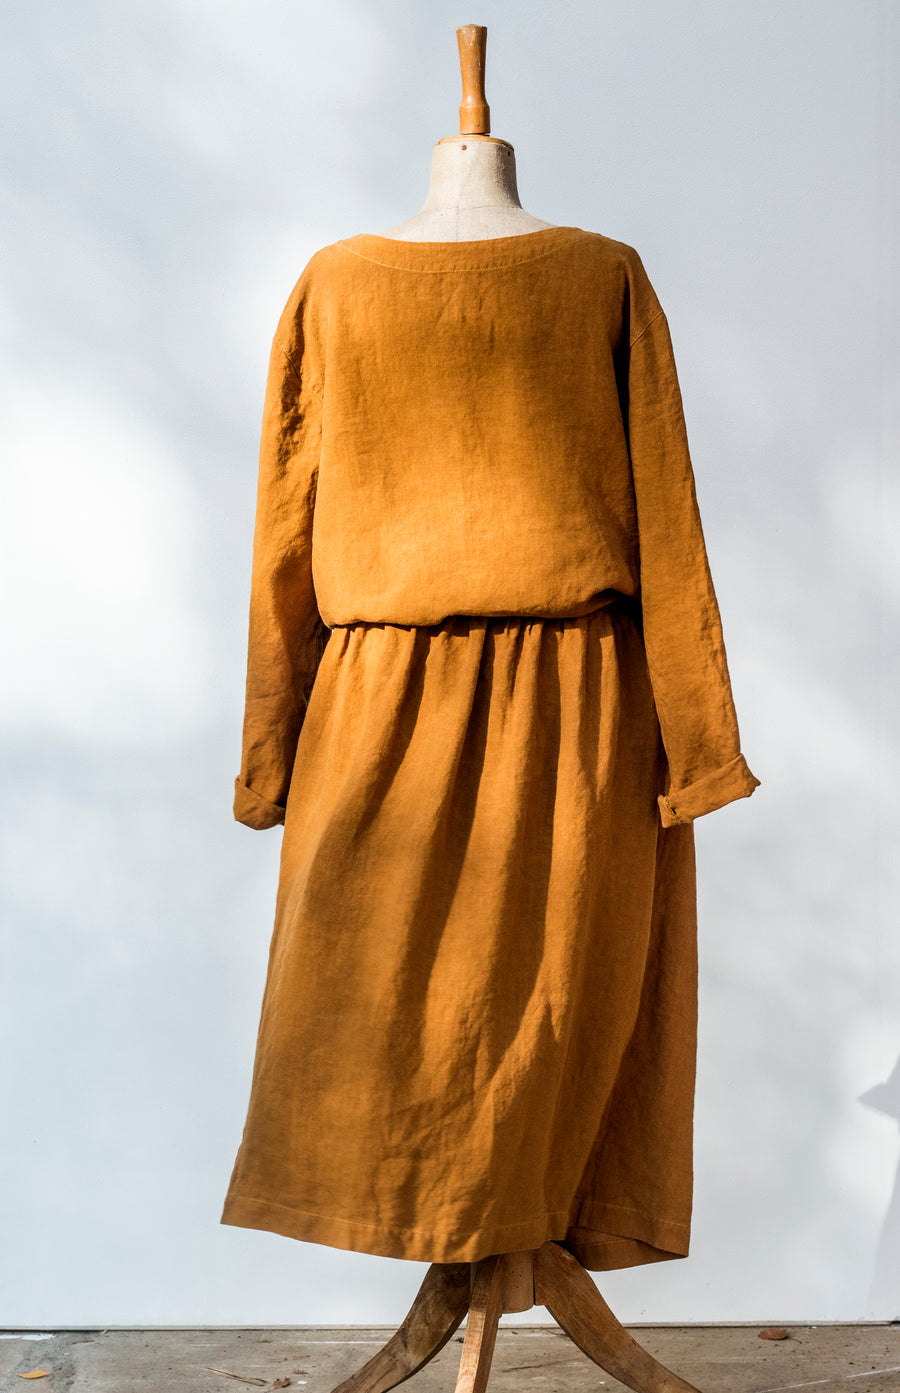 Autumn sheath oversized dress in Wood Thrush shade